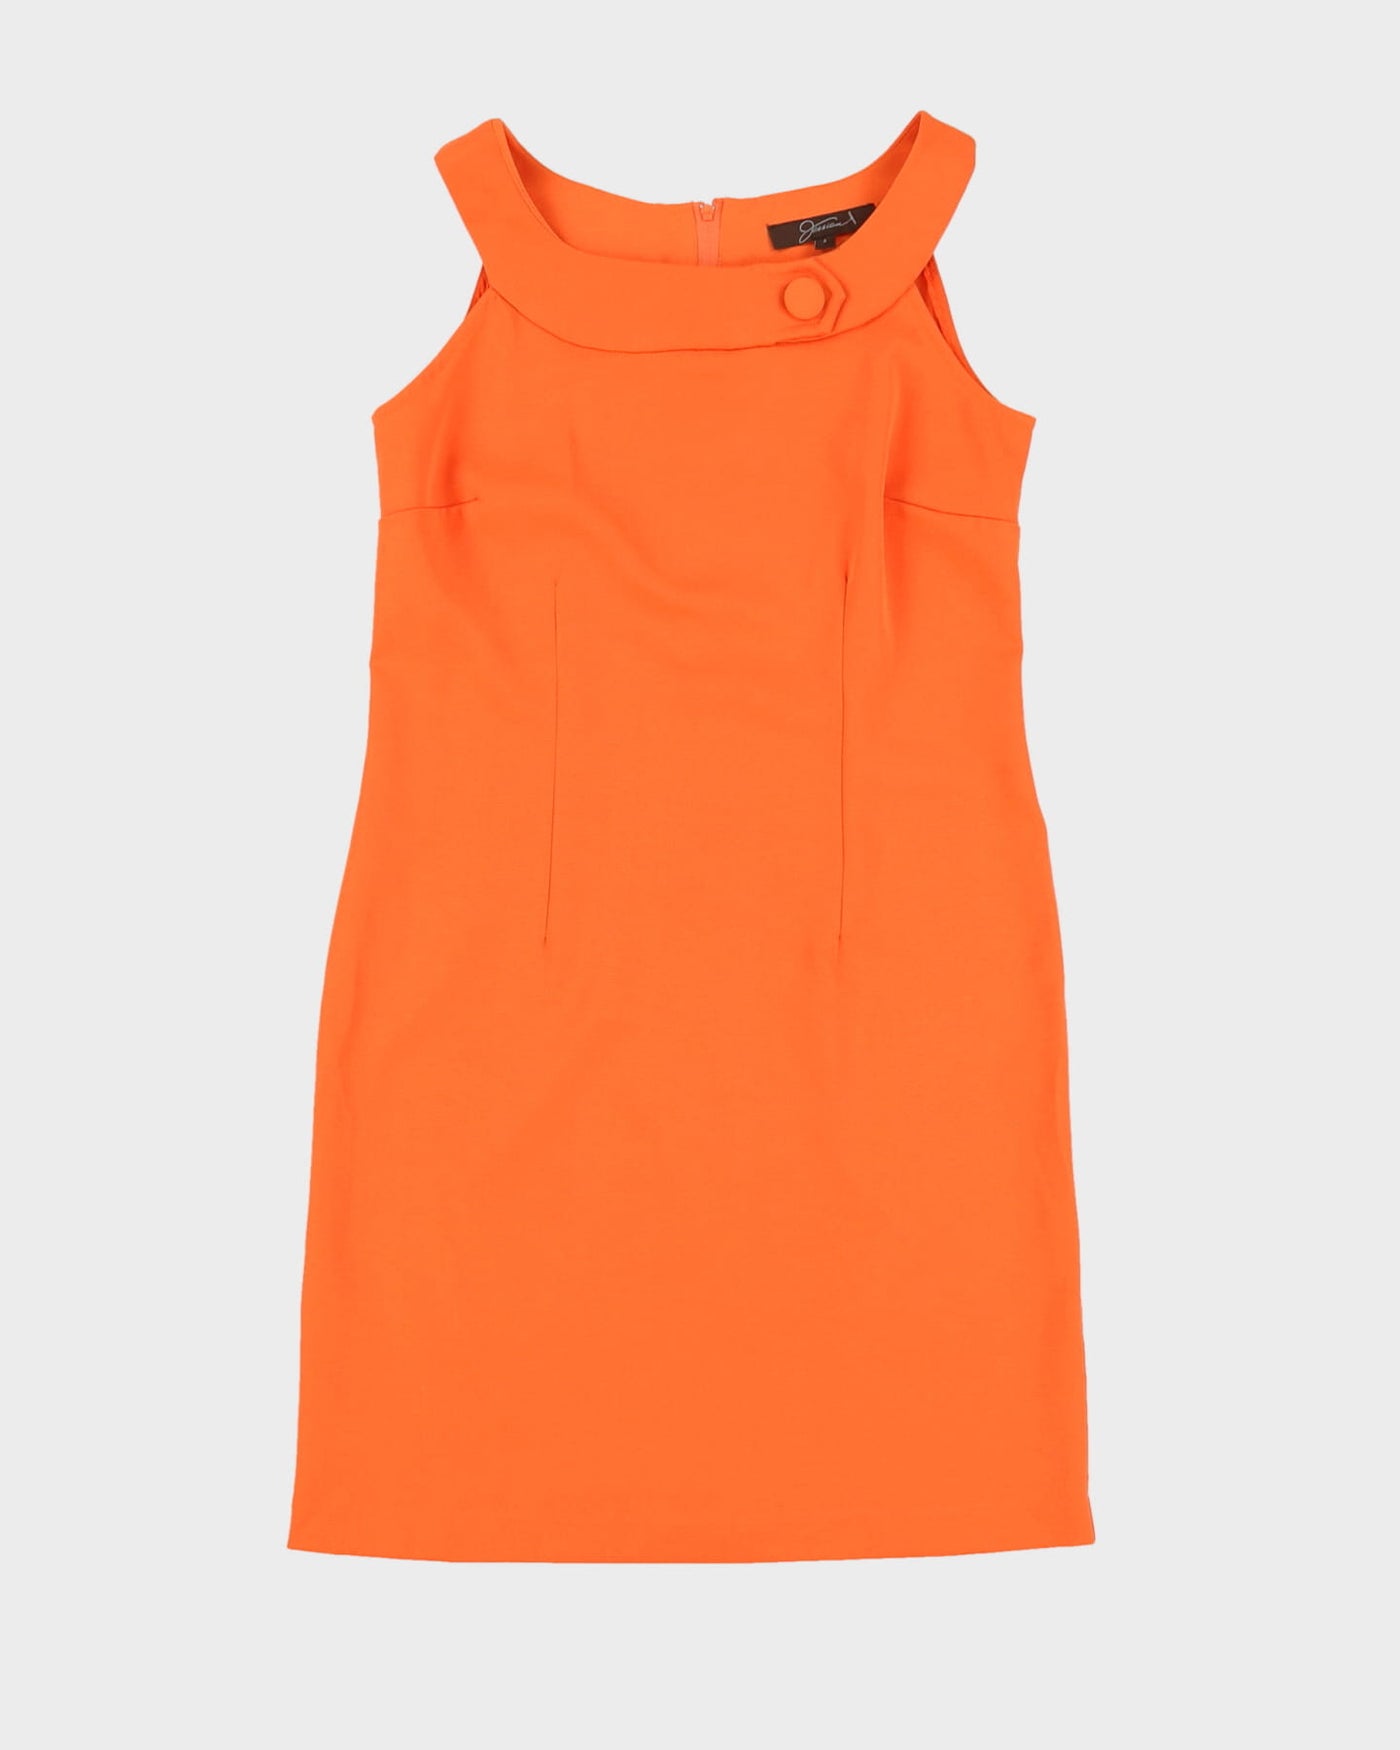 Y2K Orange Patterned Shift Dress - XS